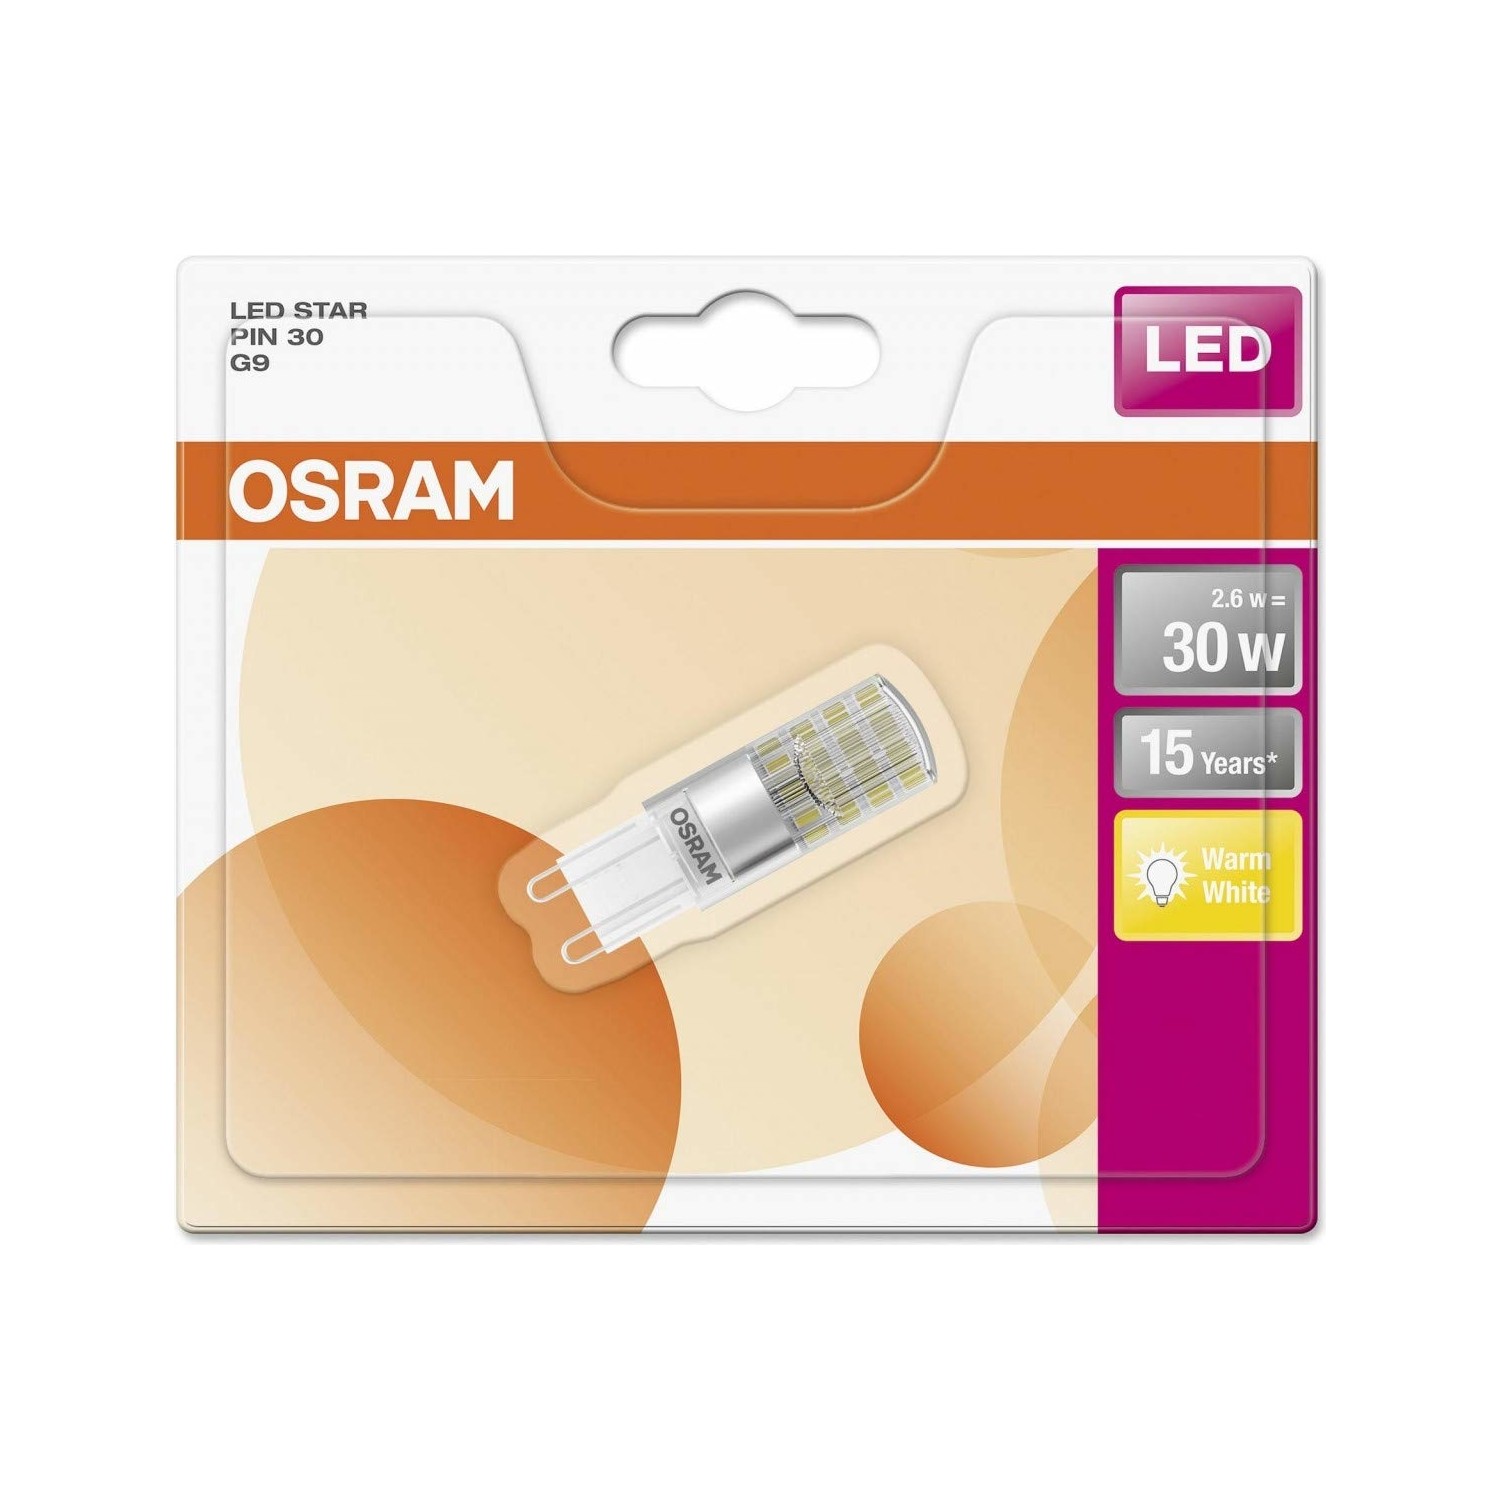 OSRAM LED STAR PIN 50 G9 320° 4000K cool white 4.8W wie 48W 